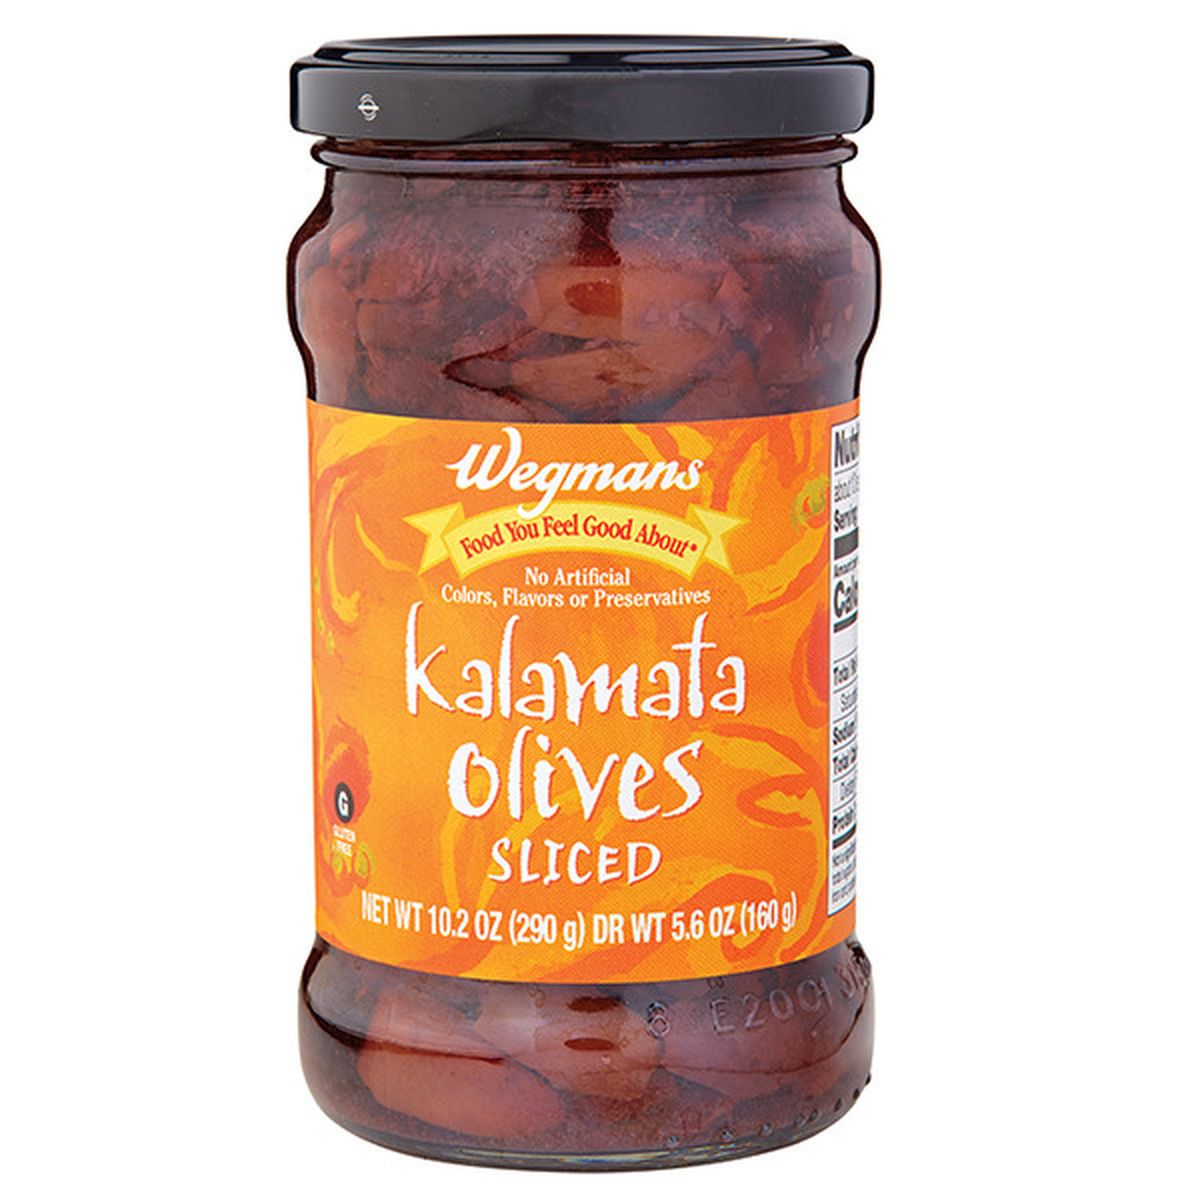 Calories in Wegmans Sliced Kalamata Olives